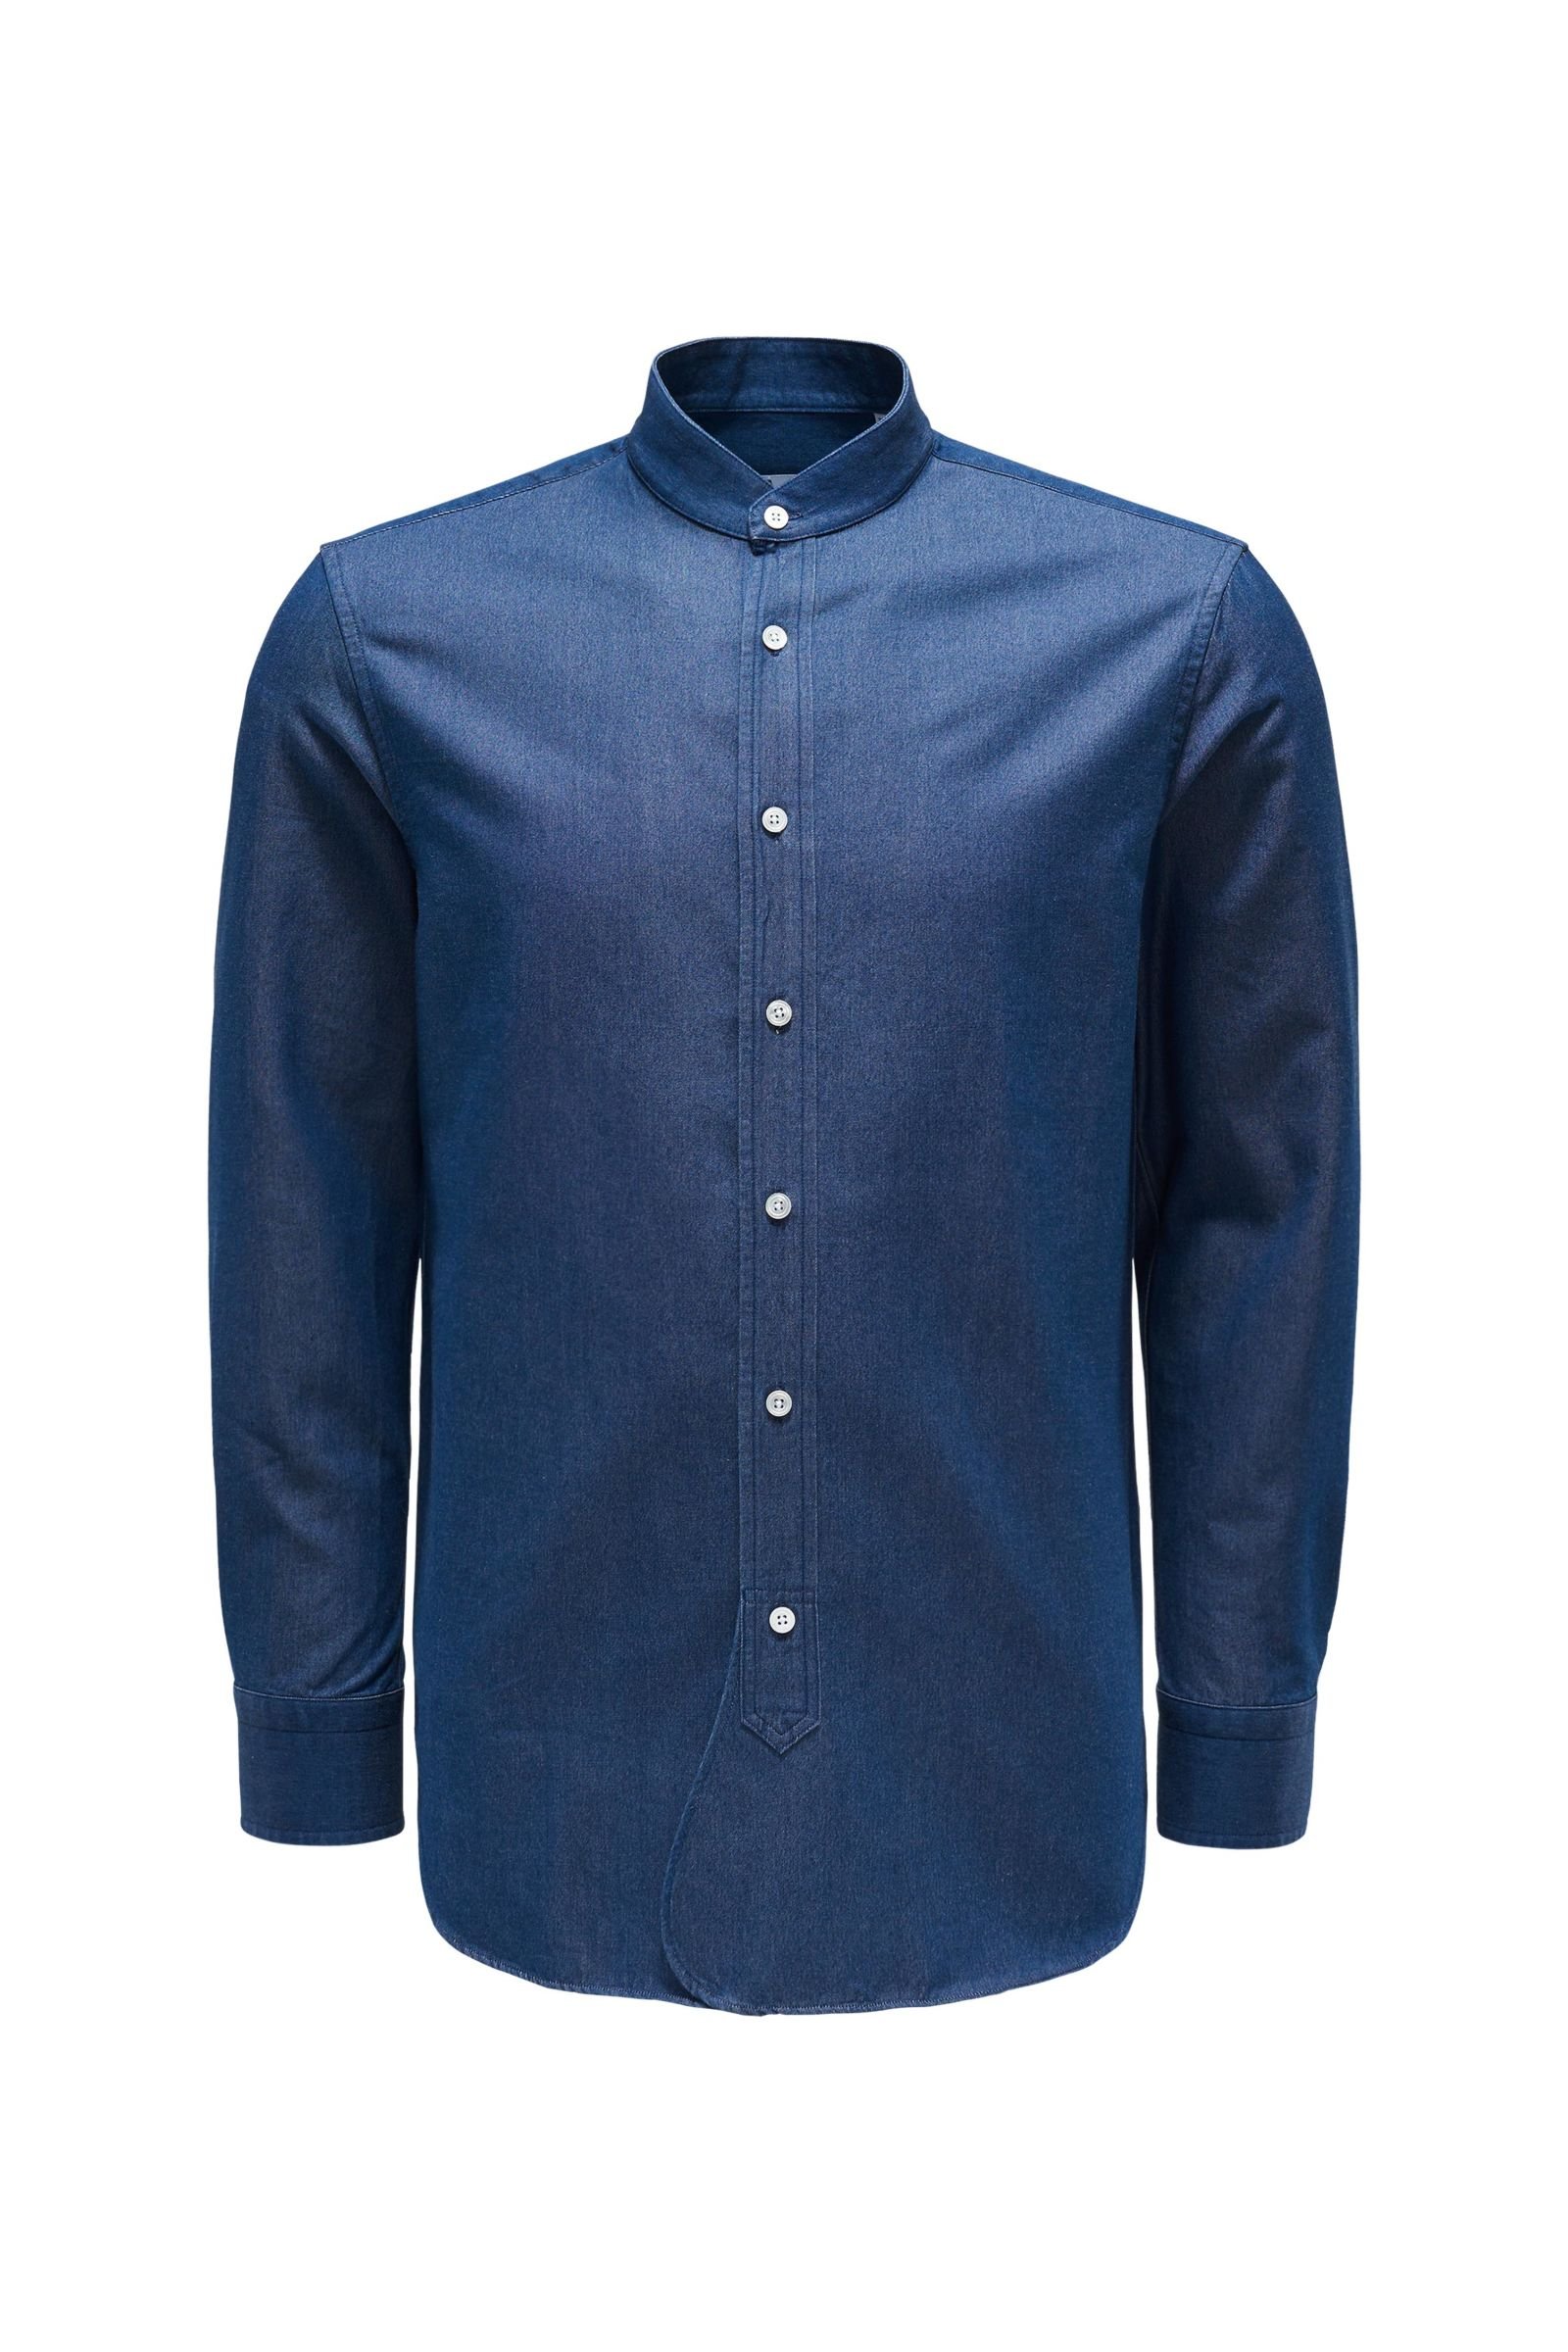 Denim shirt 'Aamilcare' grandad collar dark blue